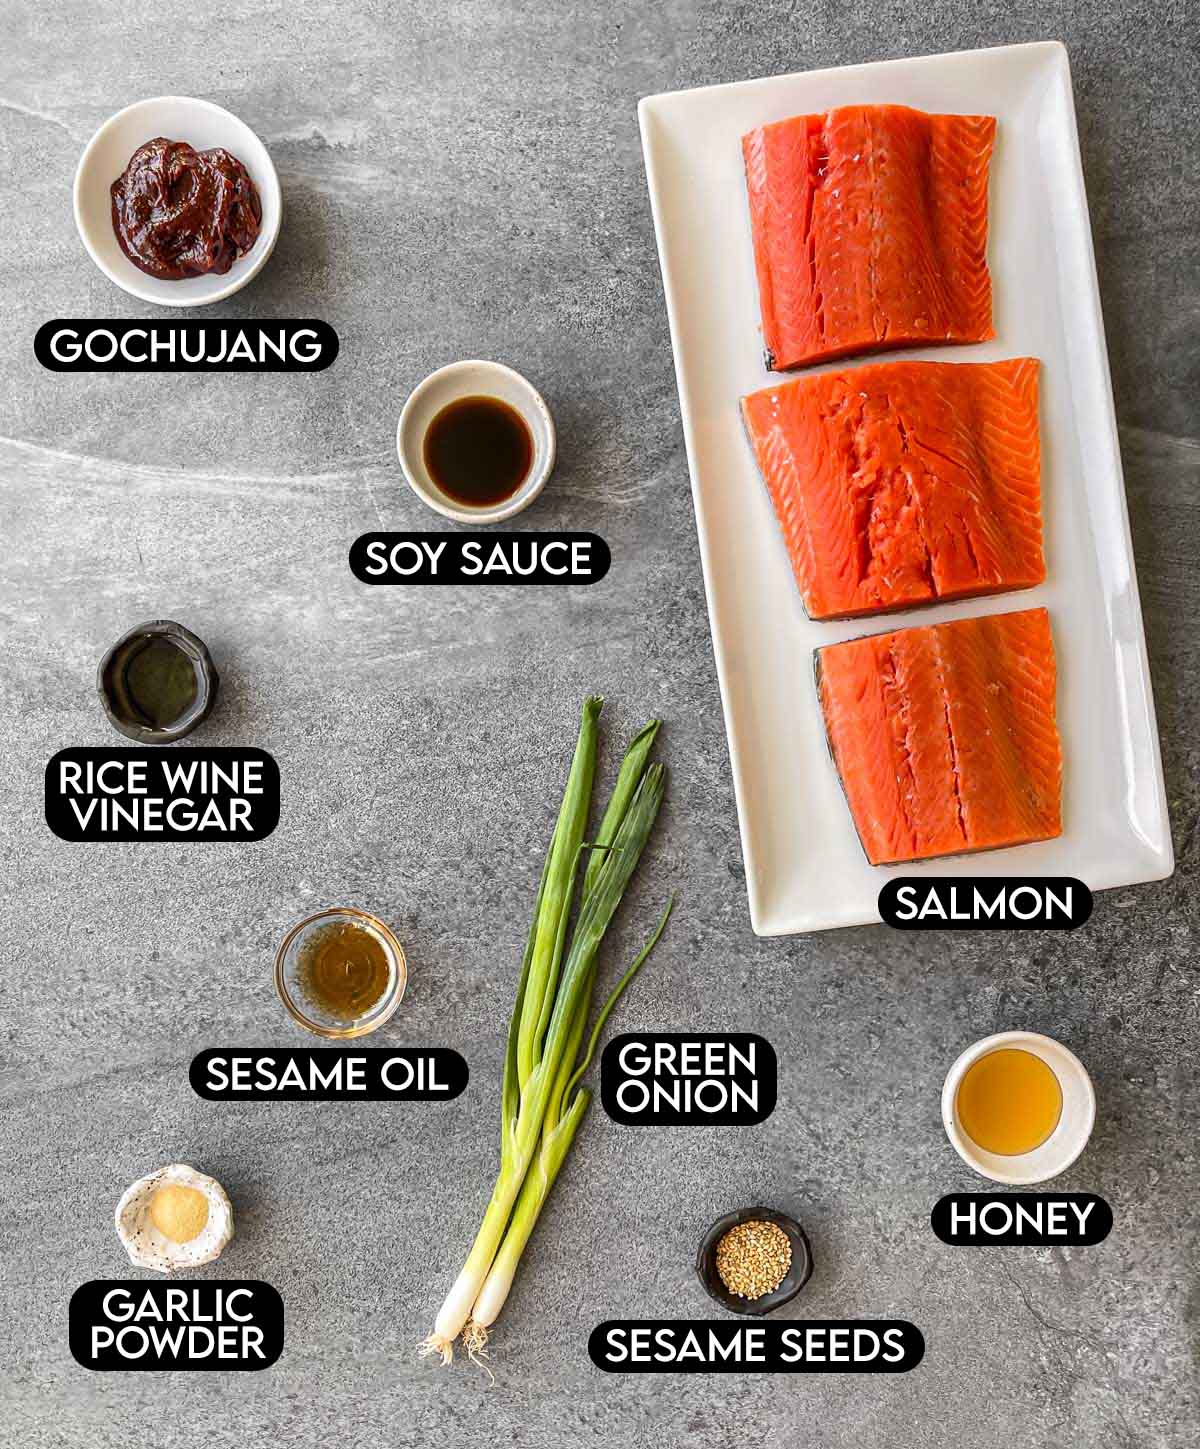 Labeled ingredients for Gochujang Salmon: gochujang, soy sauce, rice wine vinegar, sesame oil, green onion, salmon, garlic powder, sesame seeds, and honey.